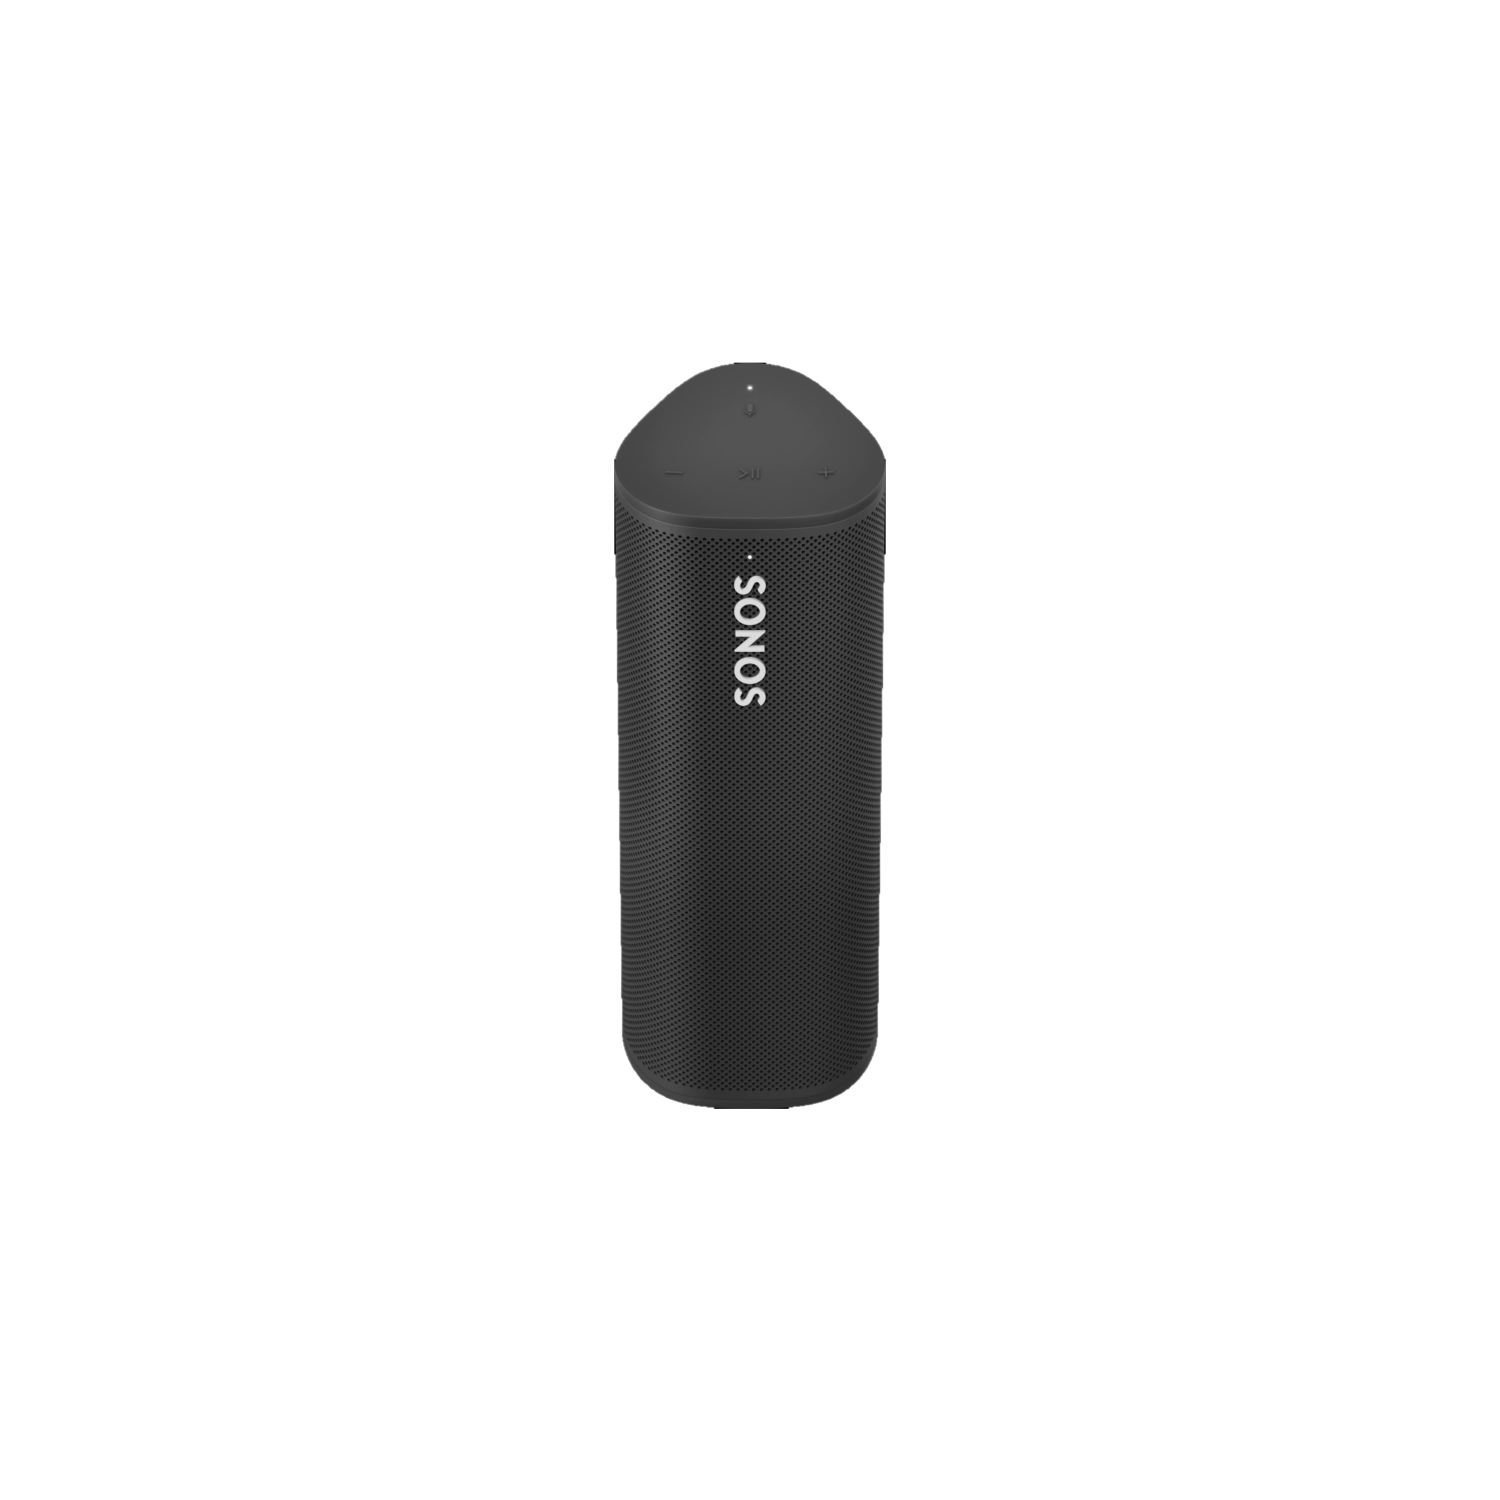 Sonos Roam Portable Waterproof Smart Speaker - Shadow Black